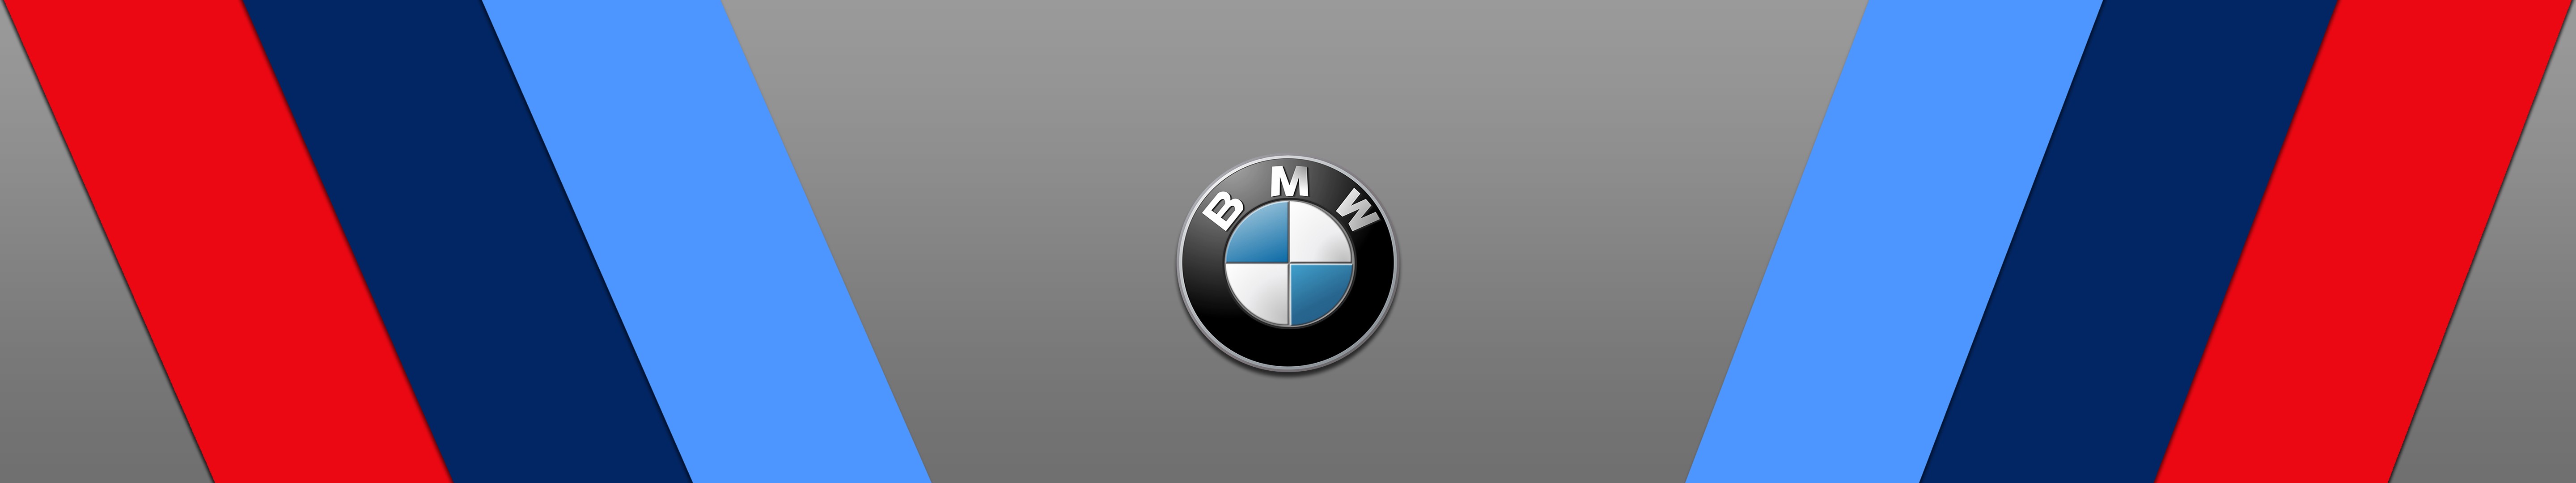 BMW, Logo, Brand, Vehicle, Car Wallpaper